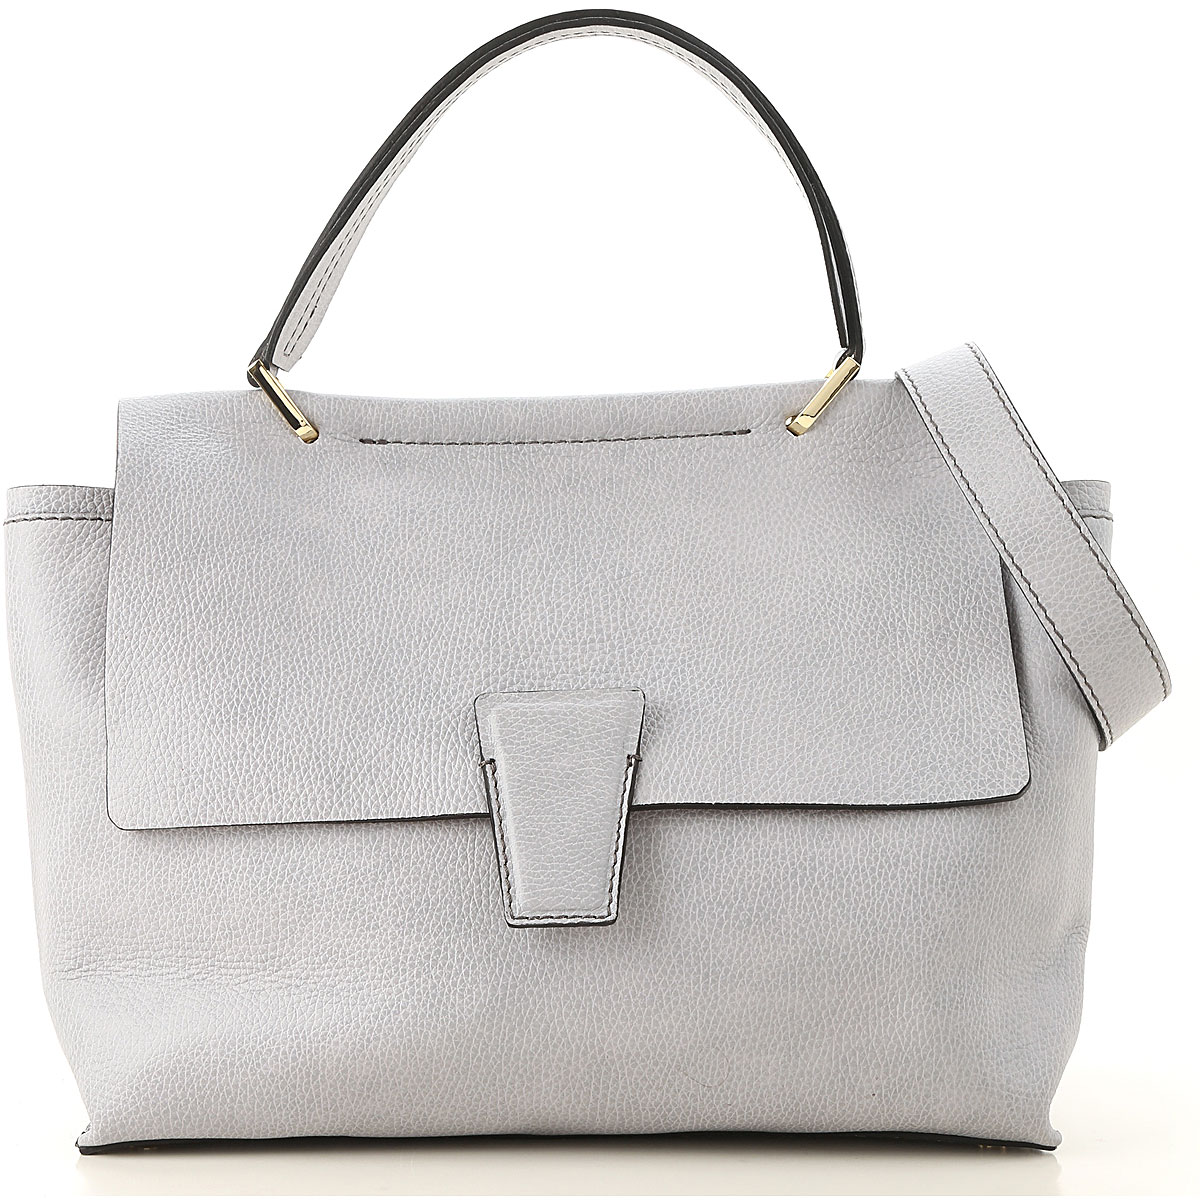 Handbags Gianni Chiarini, Style code: 6582-rmn-grigio